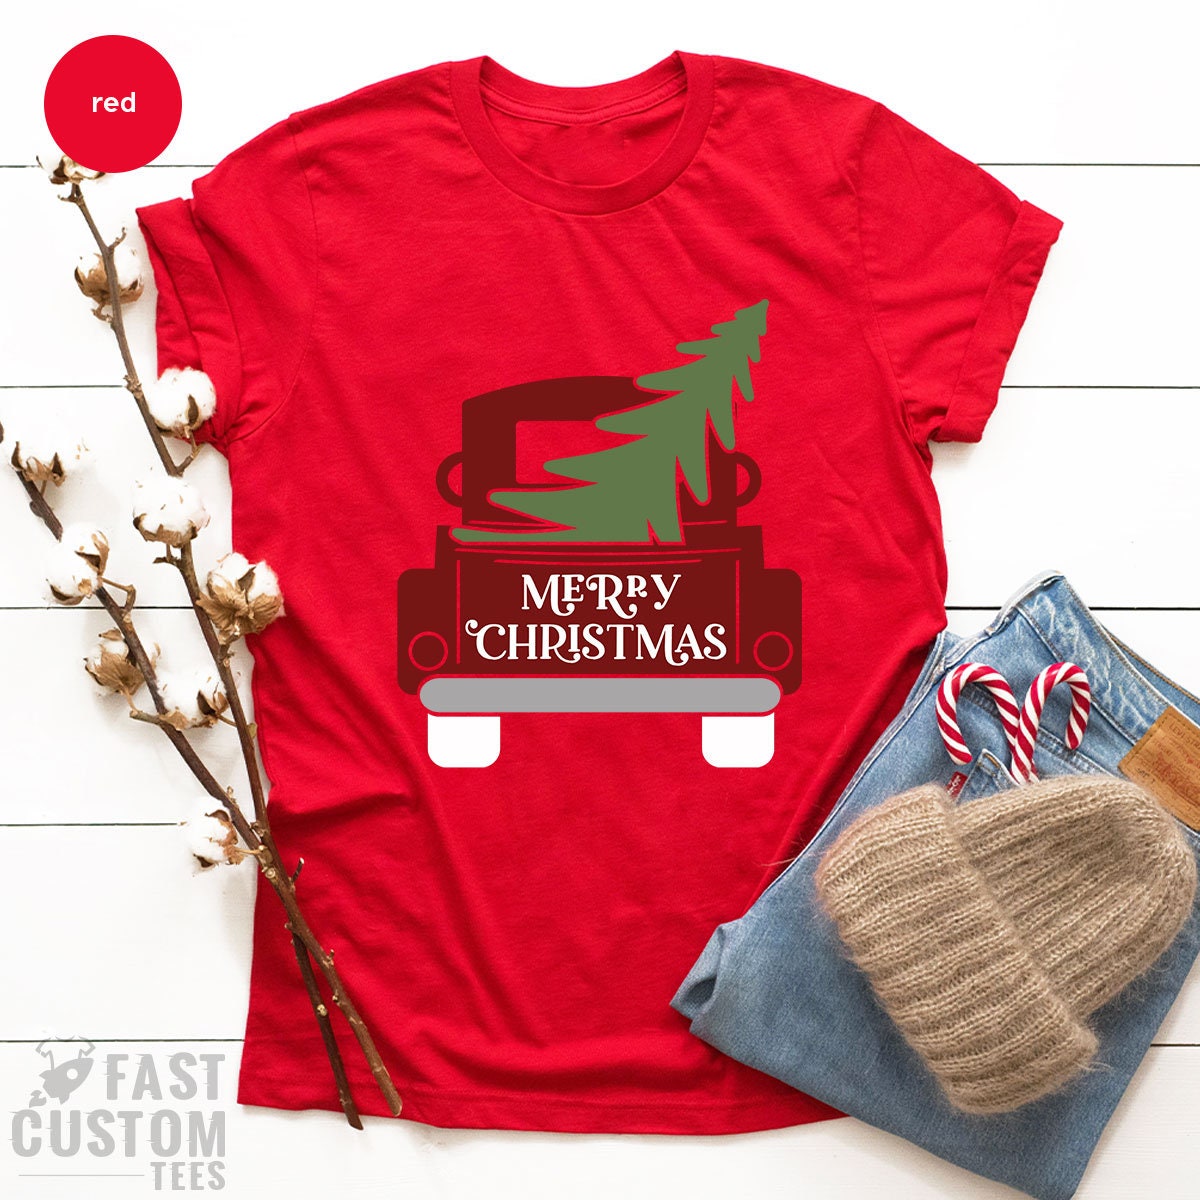 Christmas Shirts for Women, Christmas Tee, Christmas Truck Shirt, Cute Christmas Shirts, Christmas T-Shirt, Unisex Adult Tee, Merry Shirt - Fastdeliverytees.com